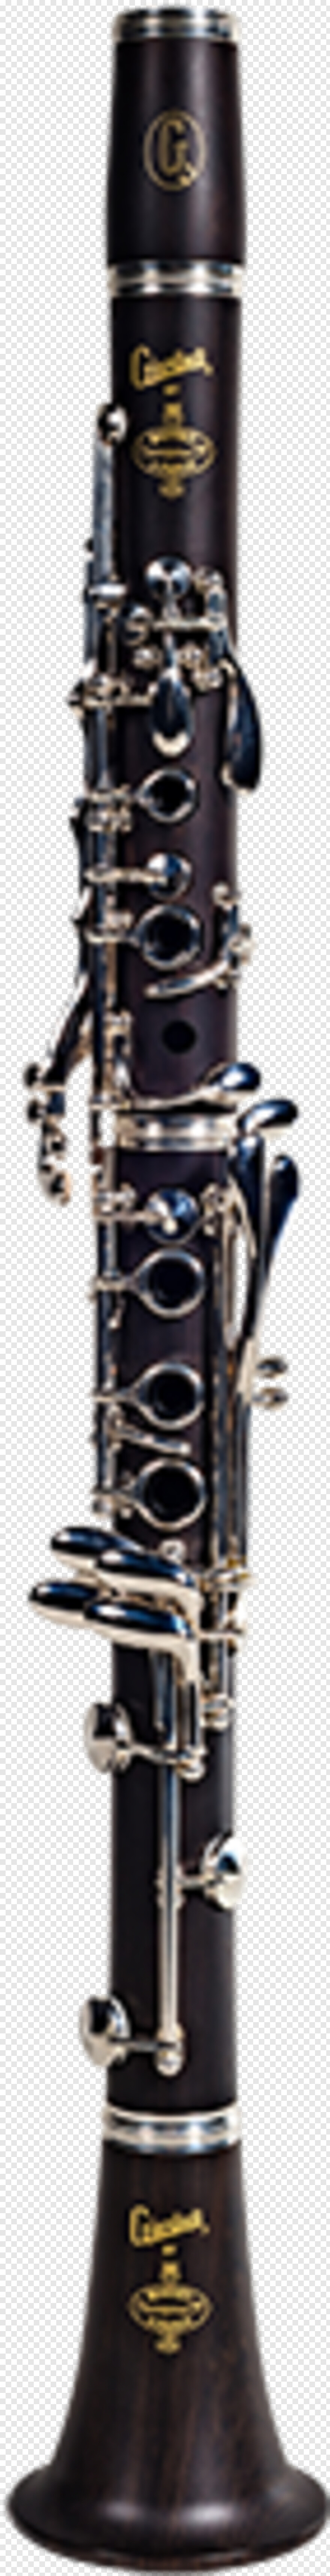 clarinet # 1105349